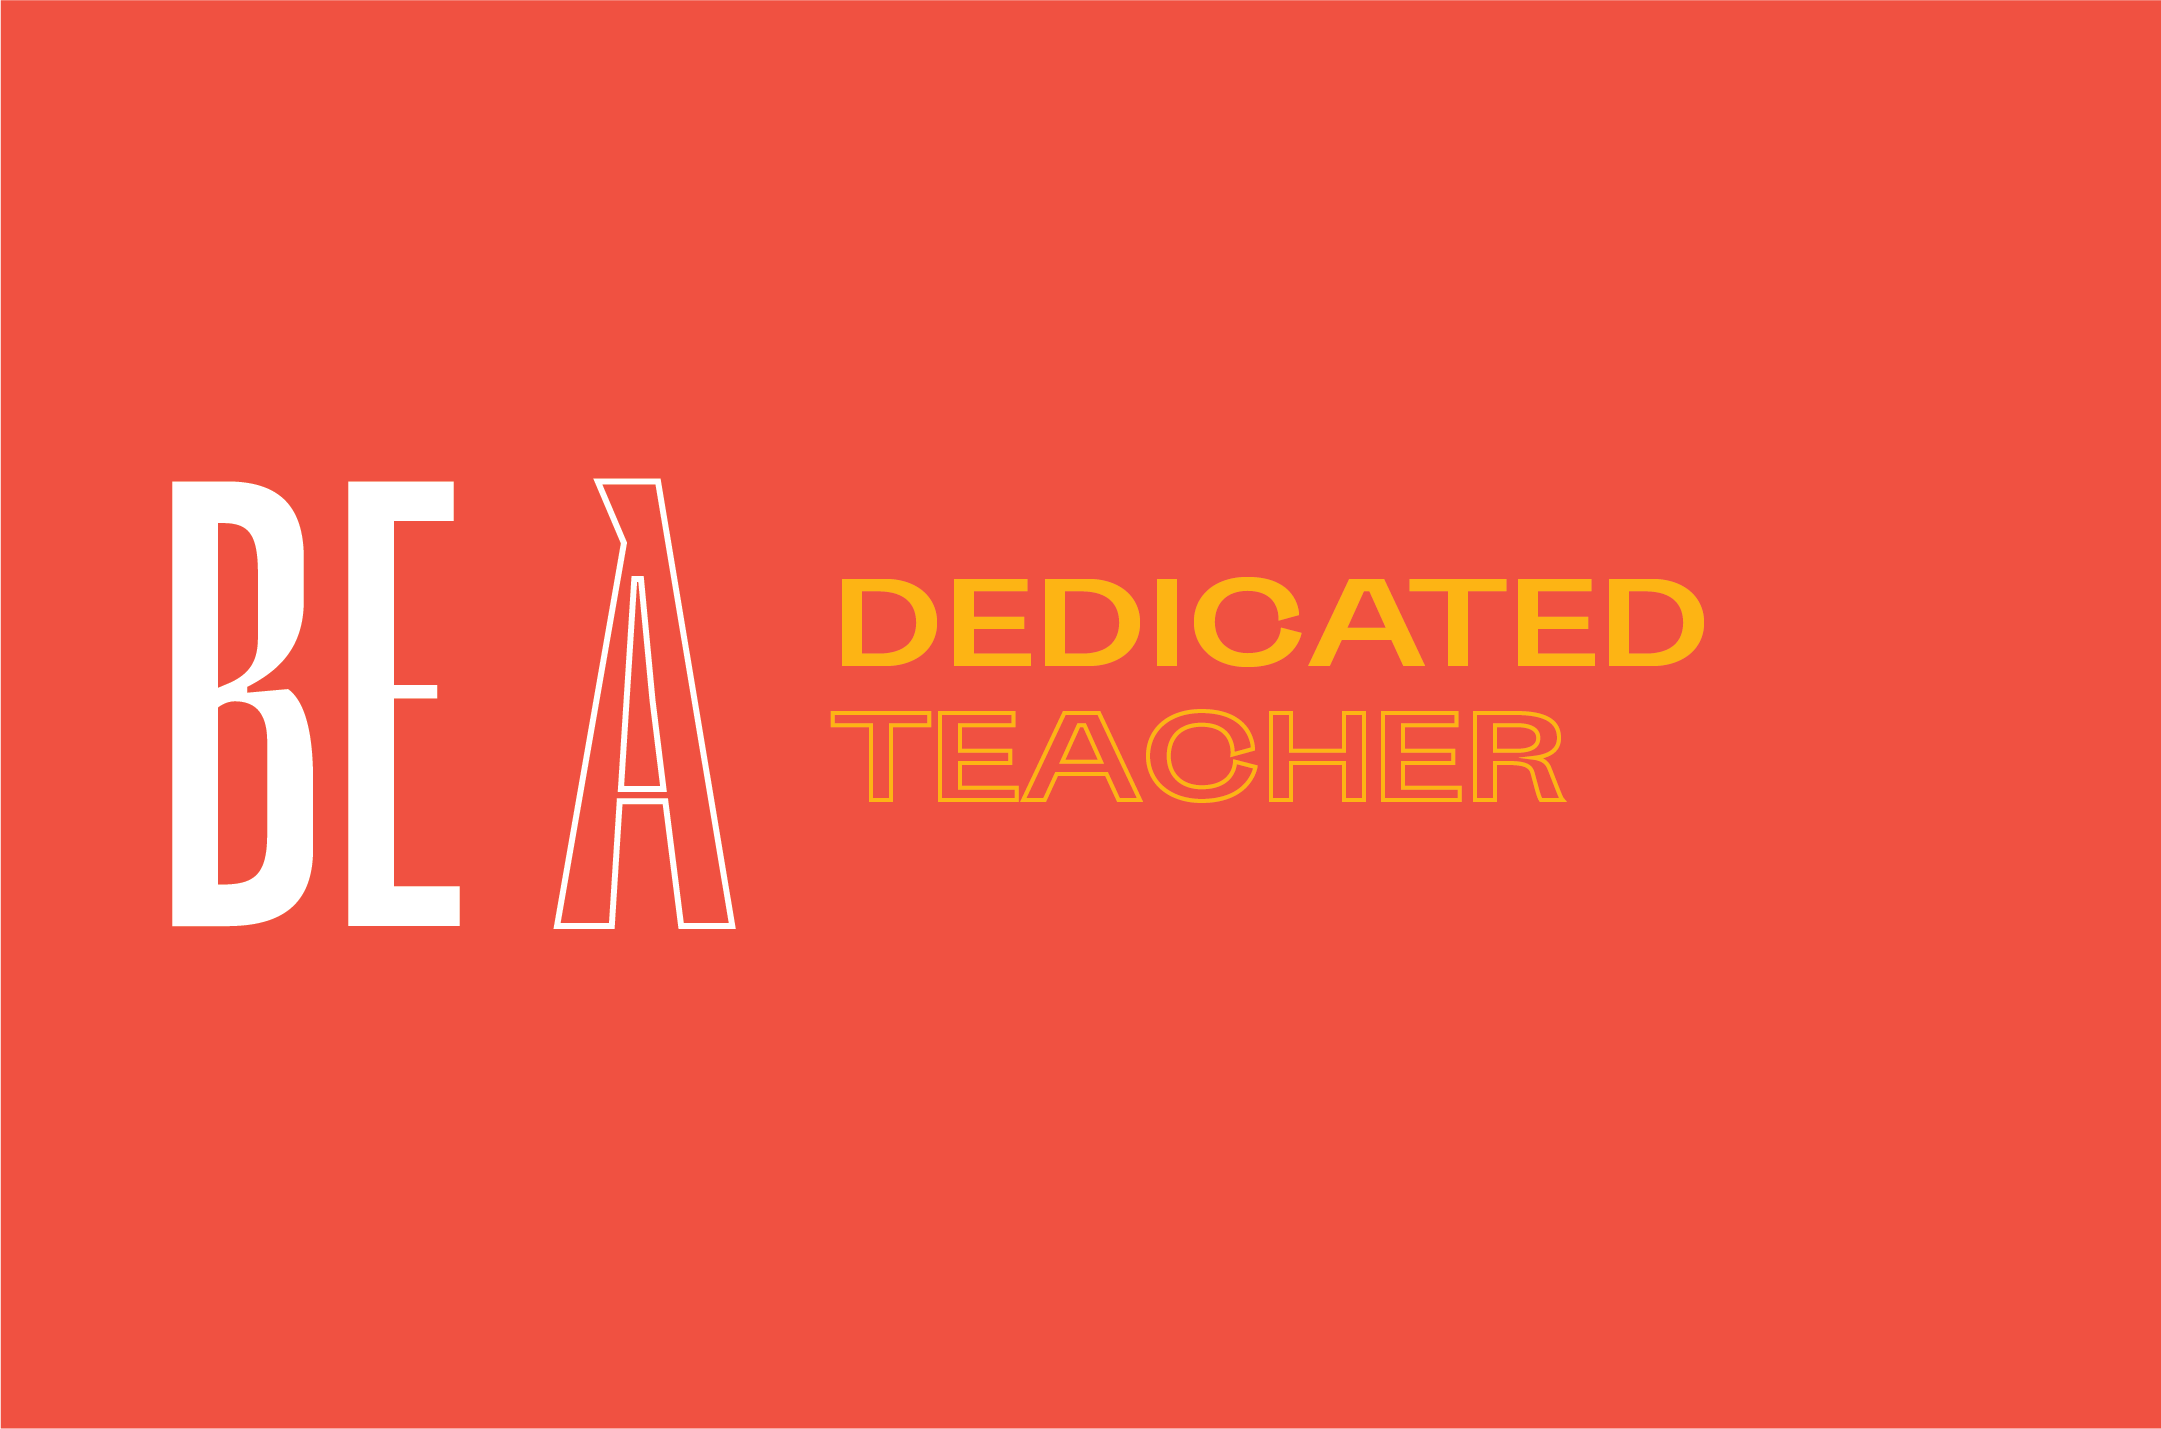 Be A Dedicated Teacher